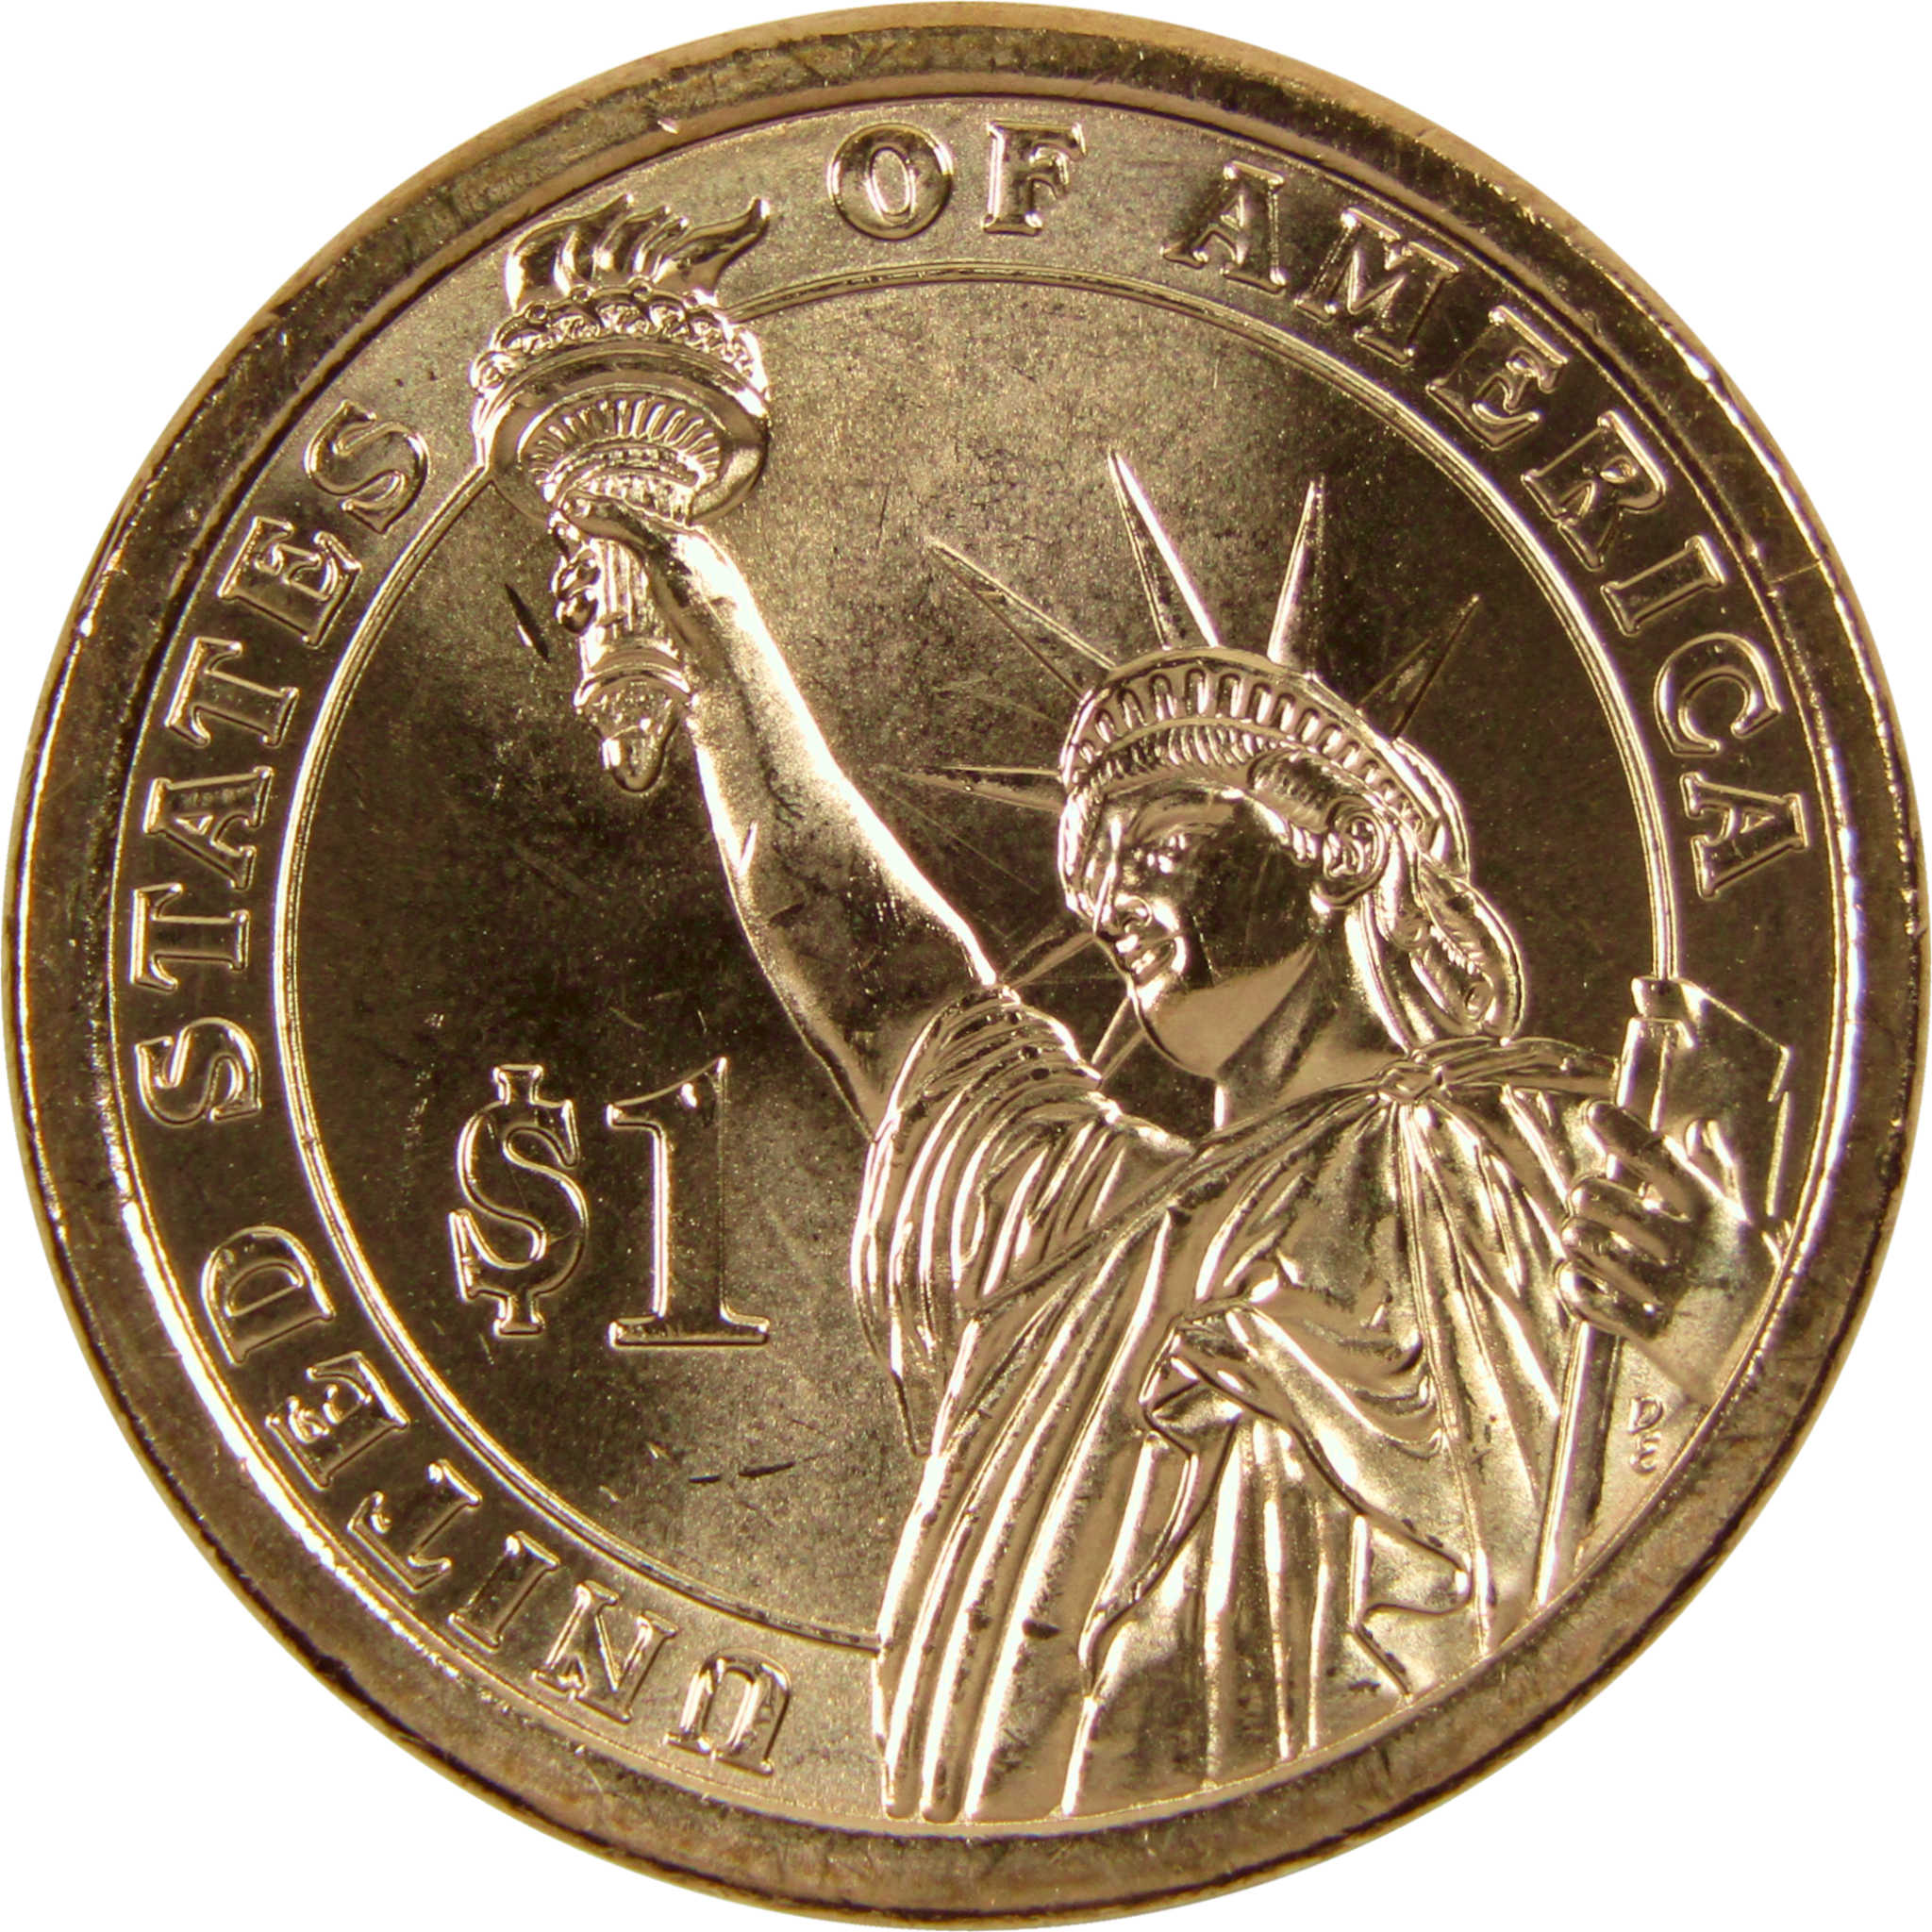 2009 D John Tyler Presidential Dollar BU Uncirculated $1 Coin